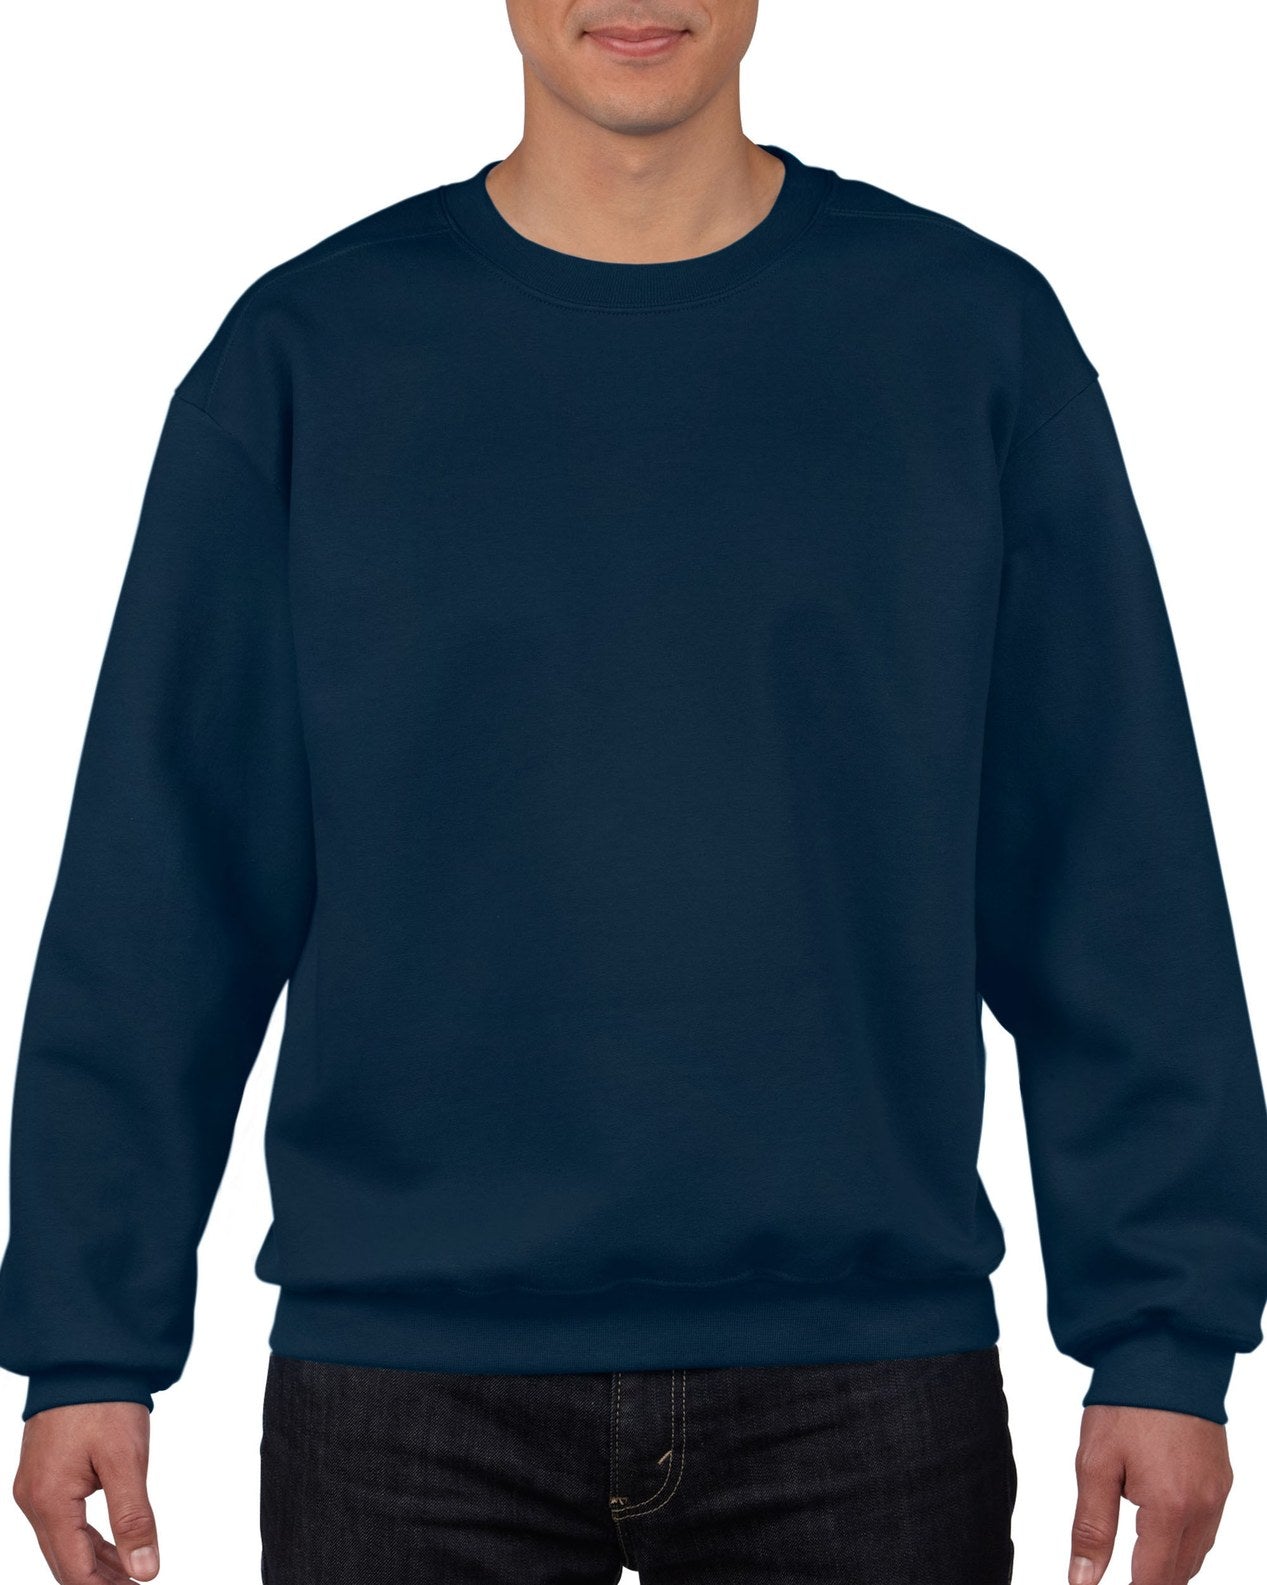 Premium Cotton Adult Crewneck Sweatshirt